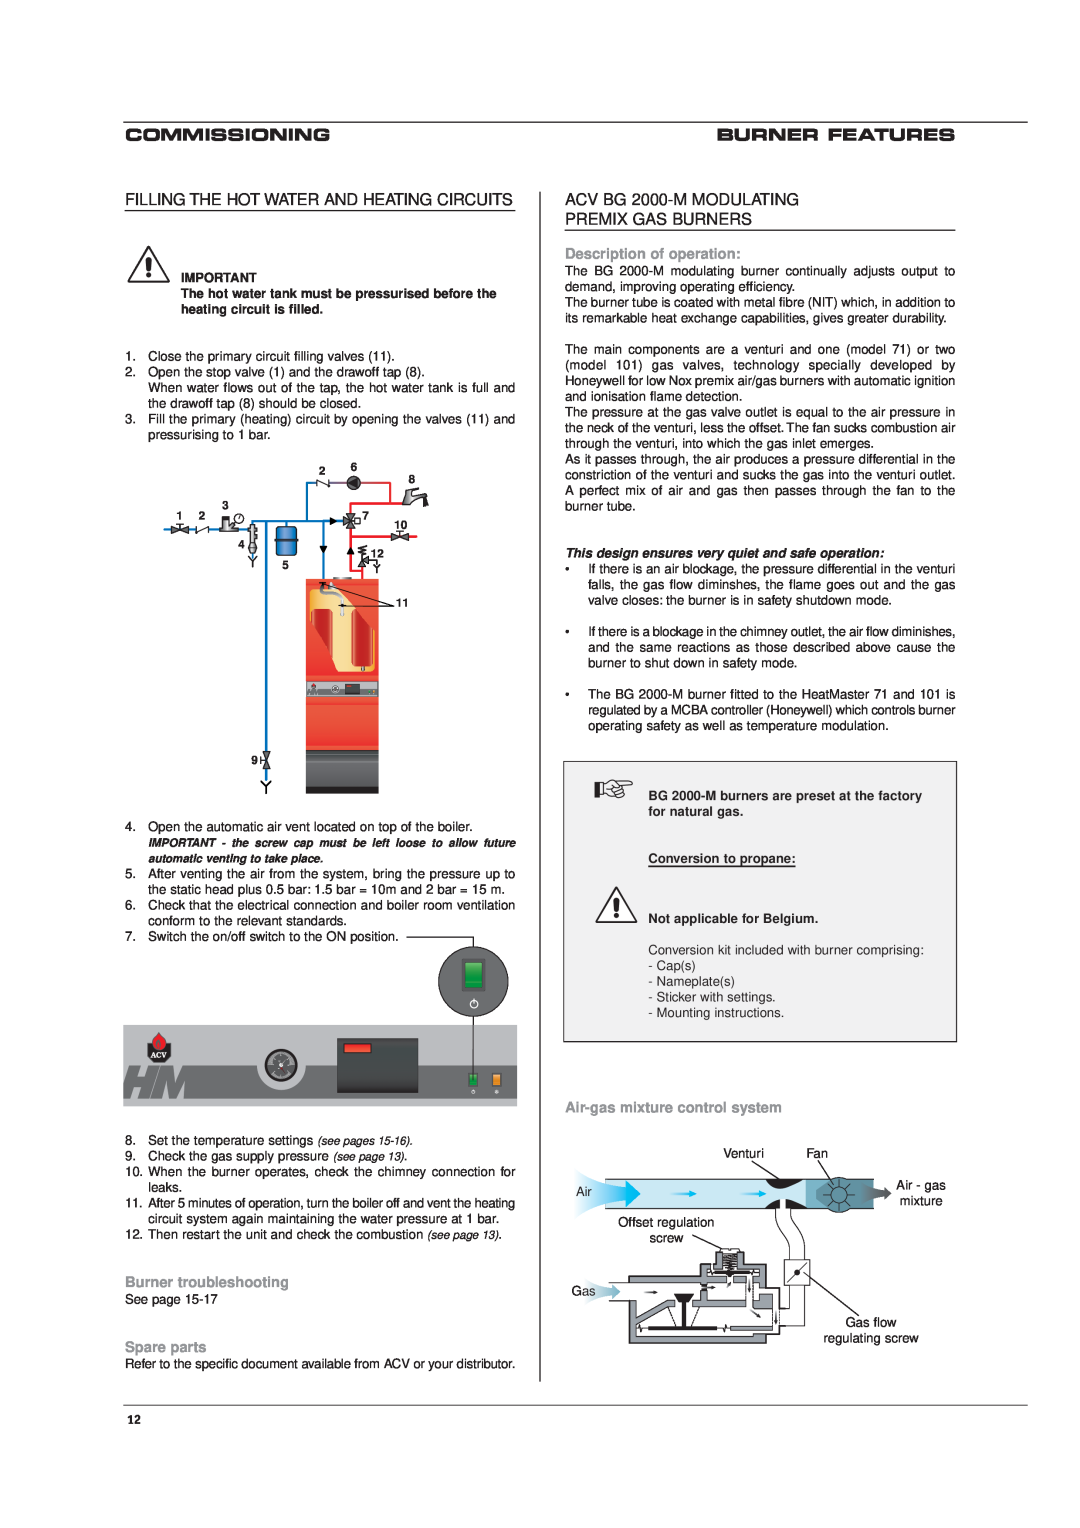 Casablanca Fan Company HM 71 Commissioning, Burner Features, Description of operation, Air-gas mixture control system 